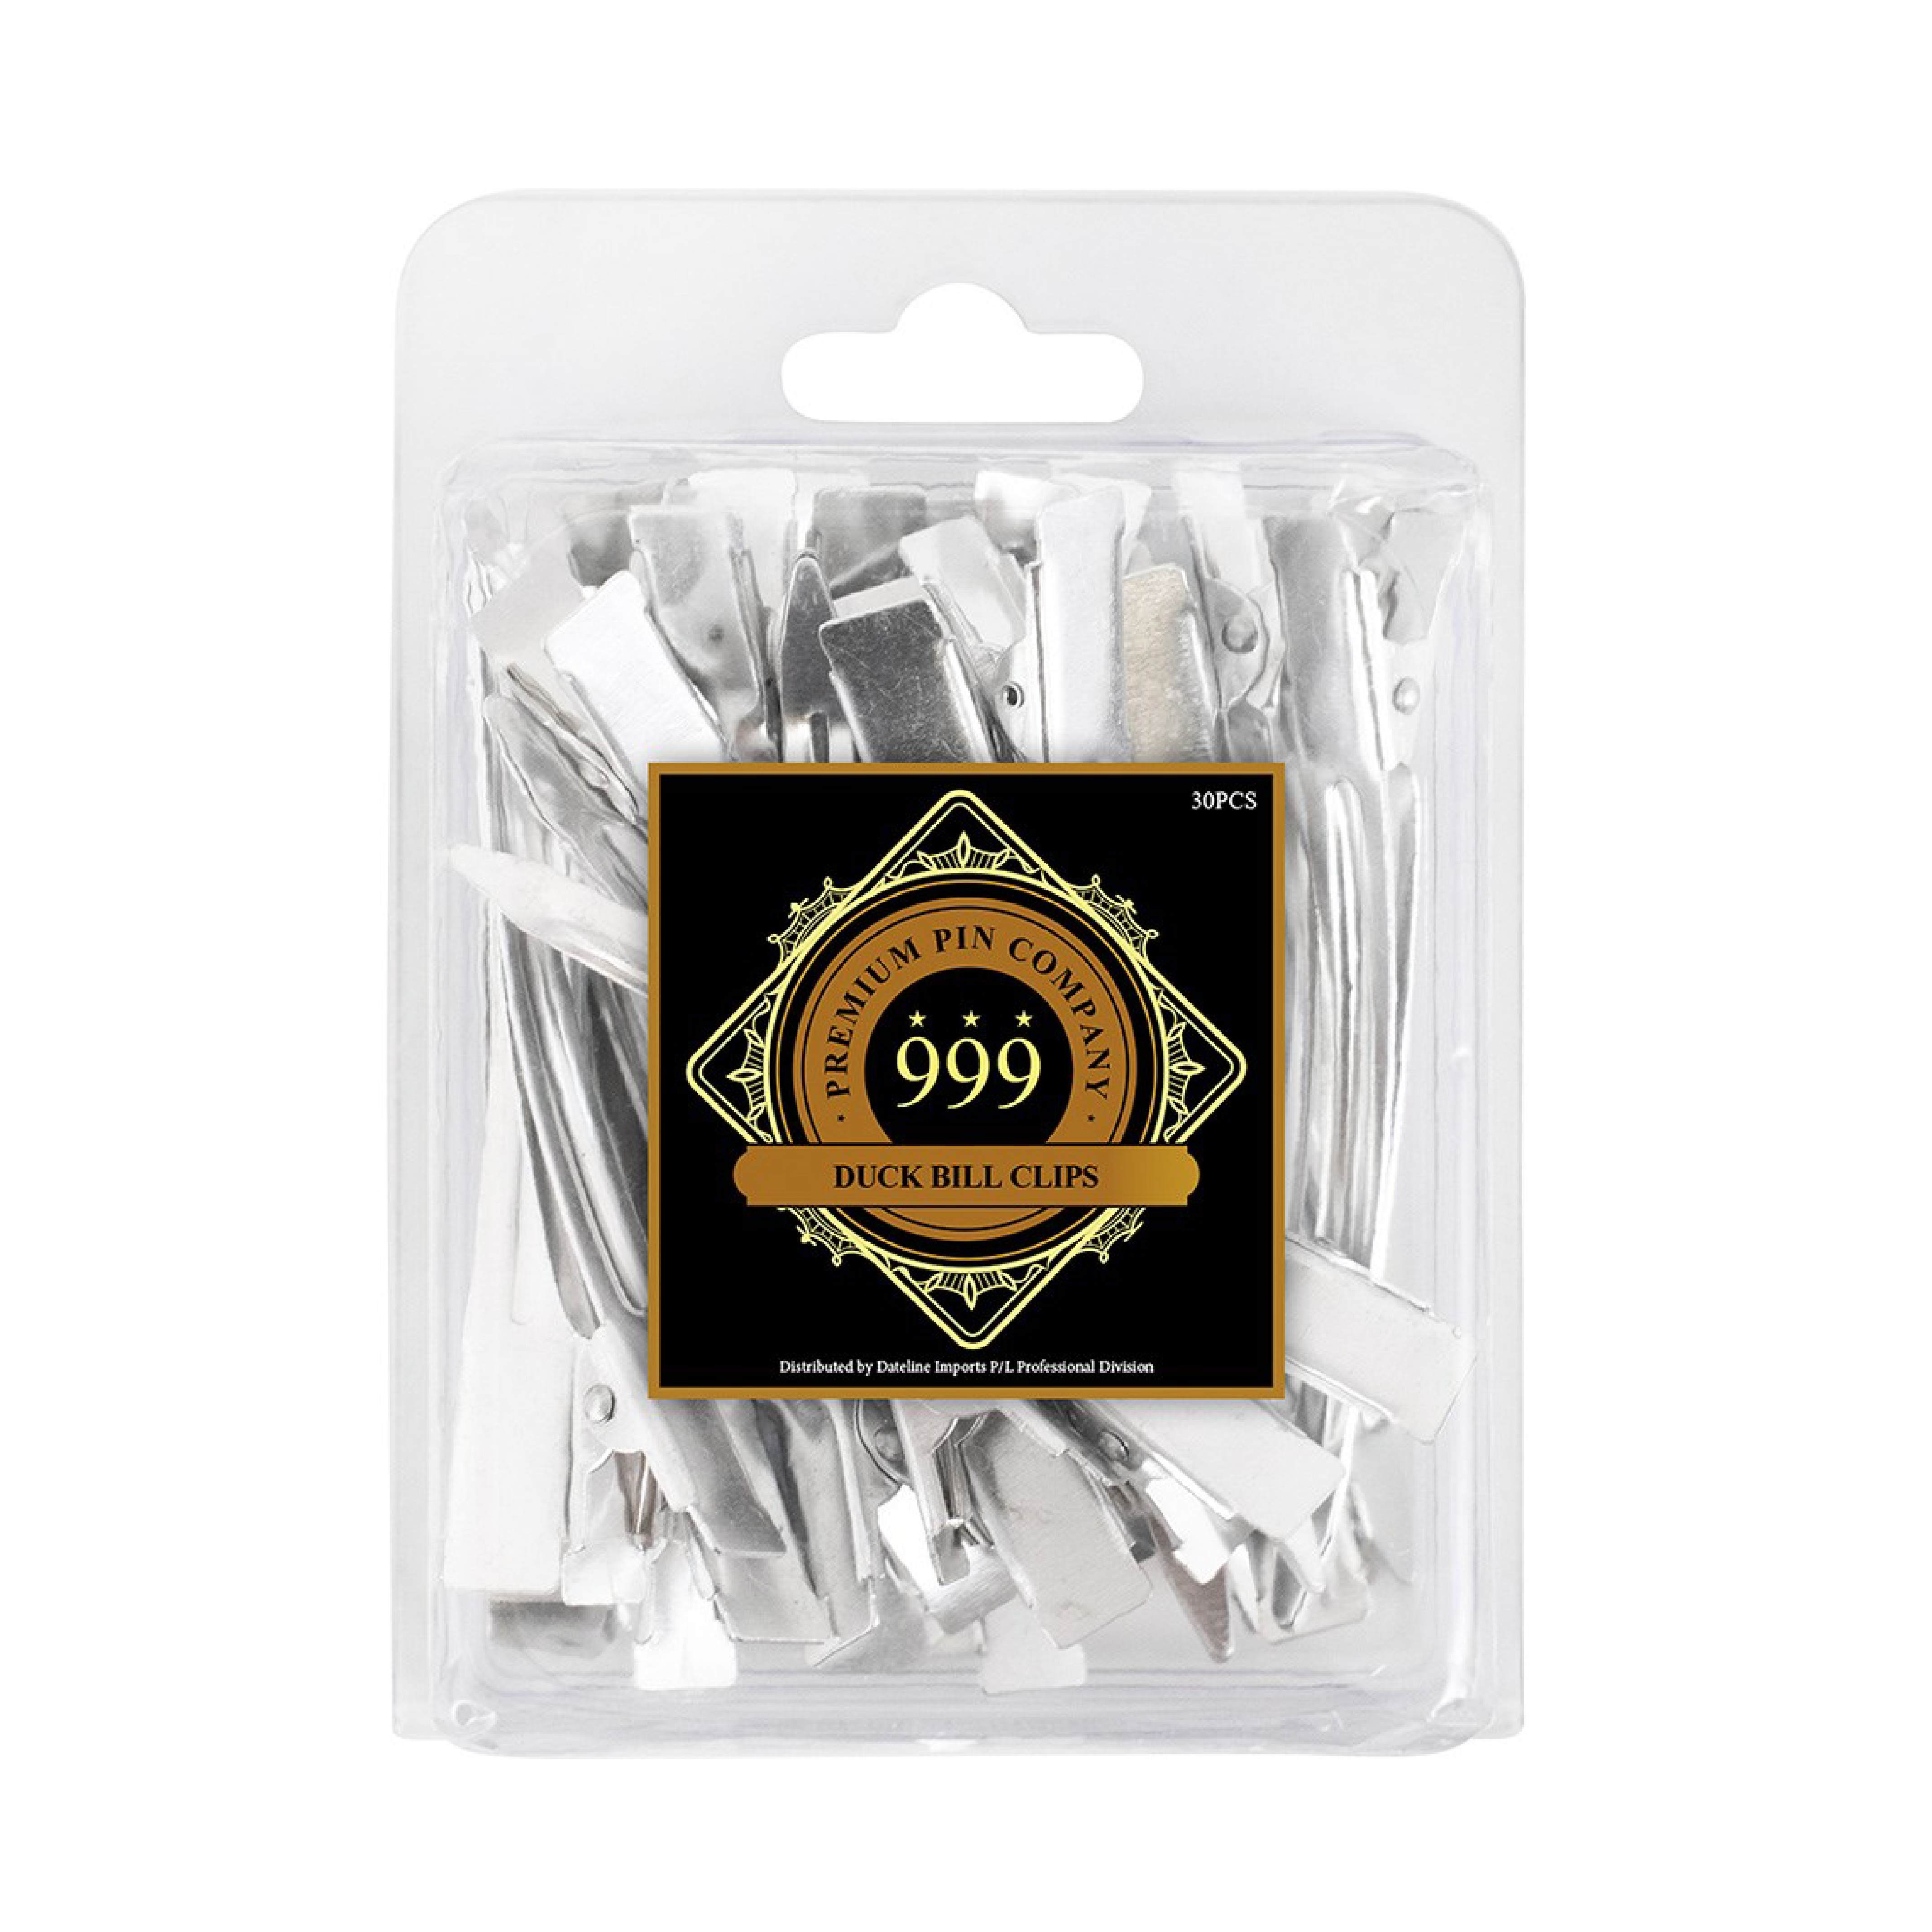 Premium Pin Company 999 Duck Bill Steel Clips - 30pcs